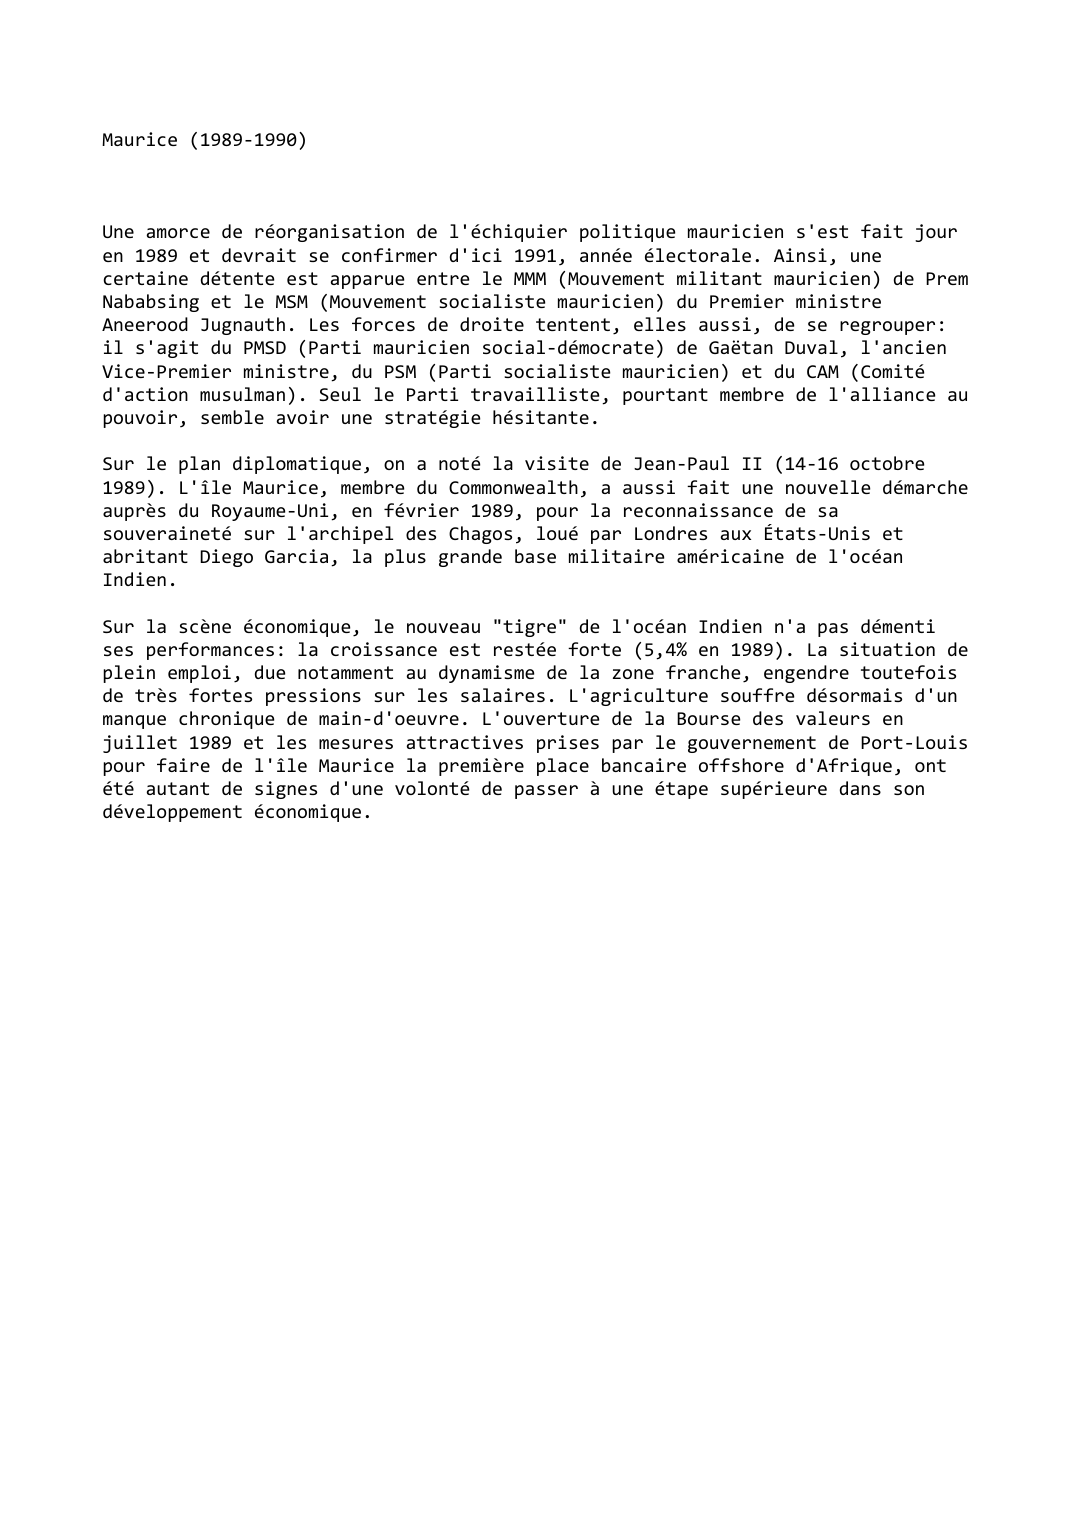 Prévisualisation du document Maurice (1989-1990)